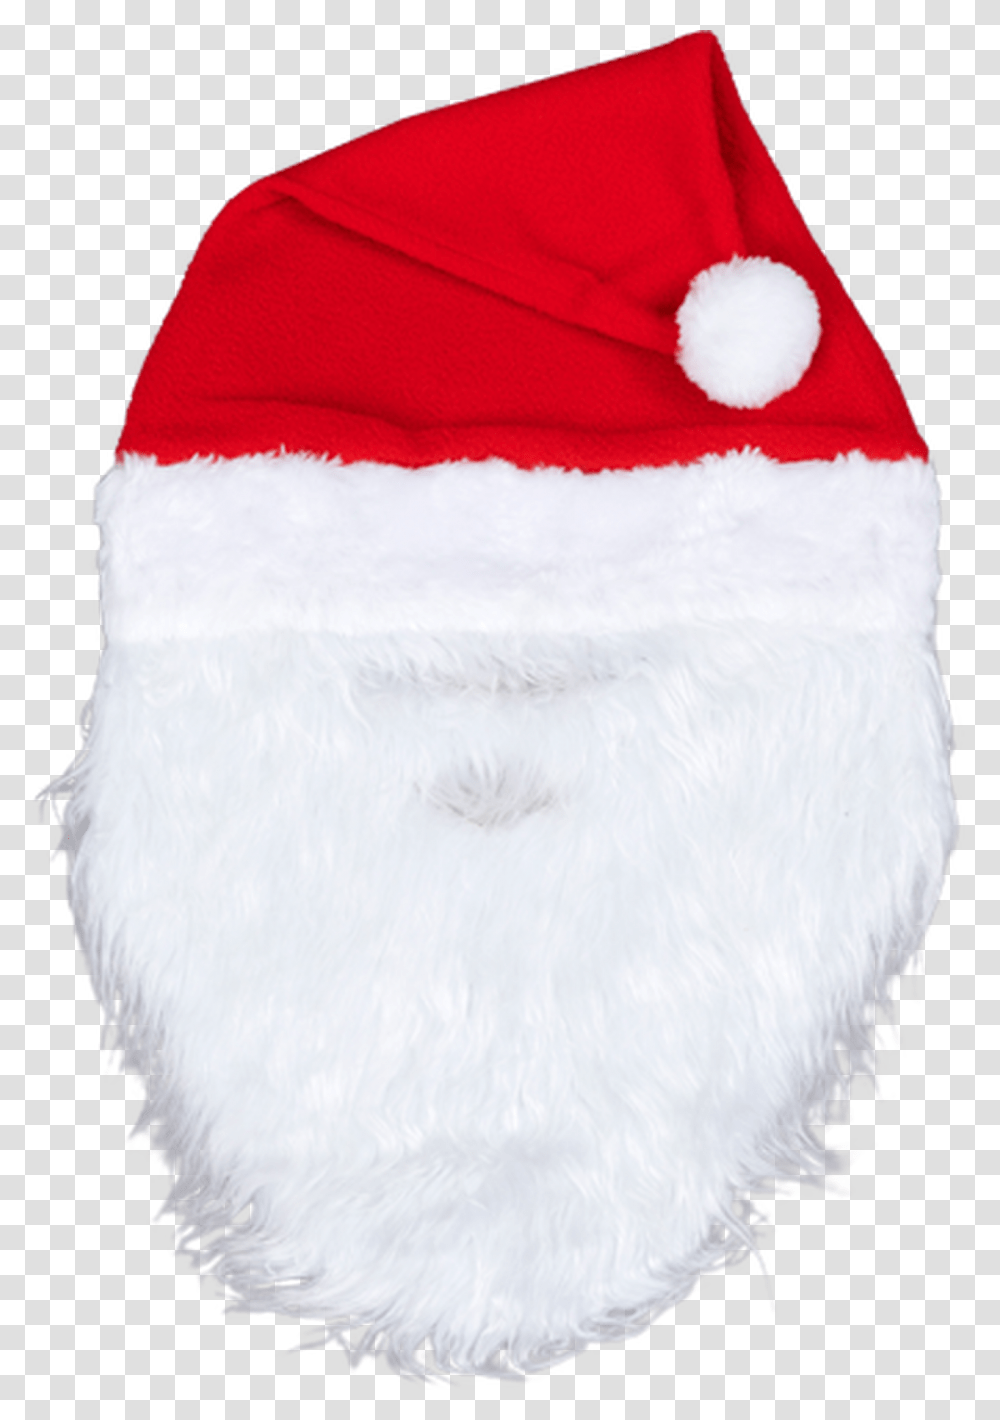 Clip Art Santa Hat And Beard Costume Hat, Bag, Rug, Christmas Stocking Transparent Png